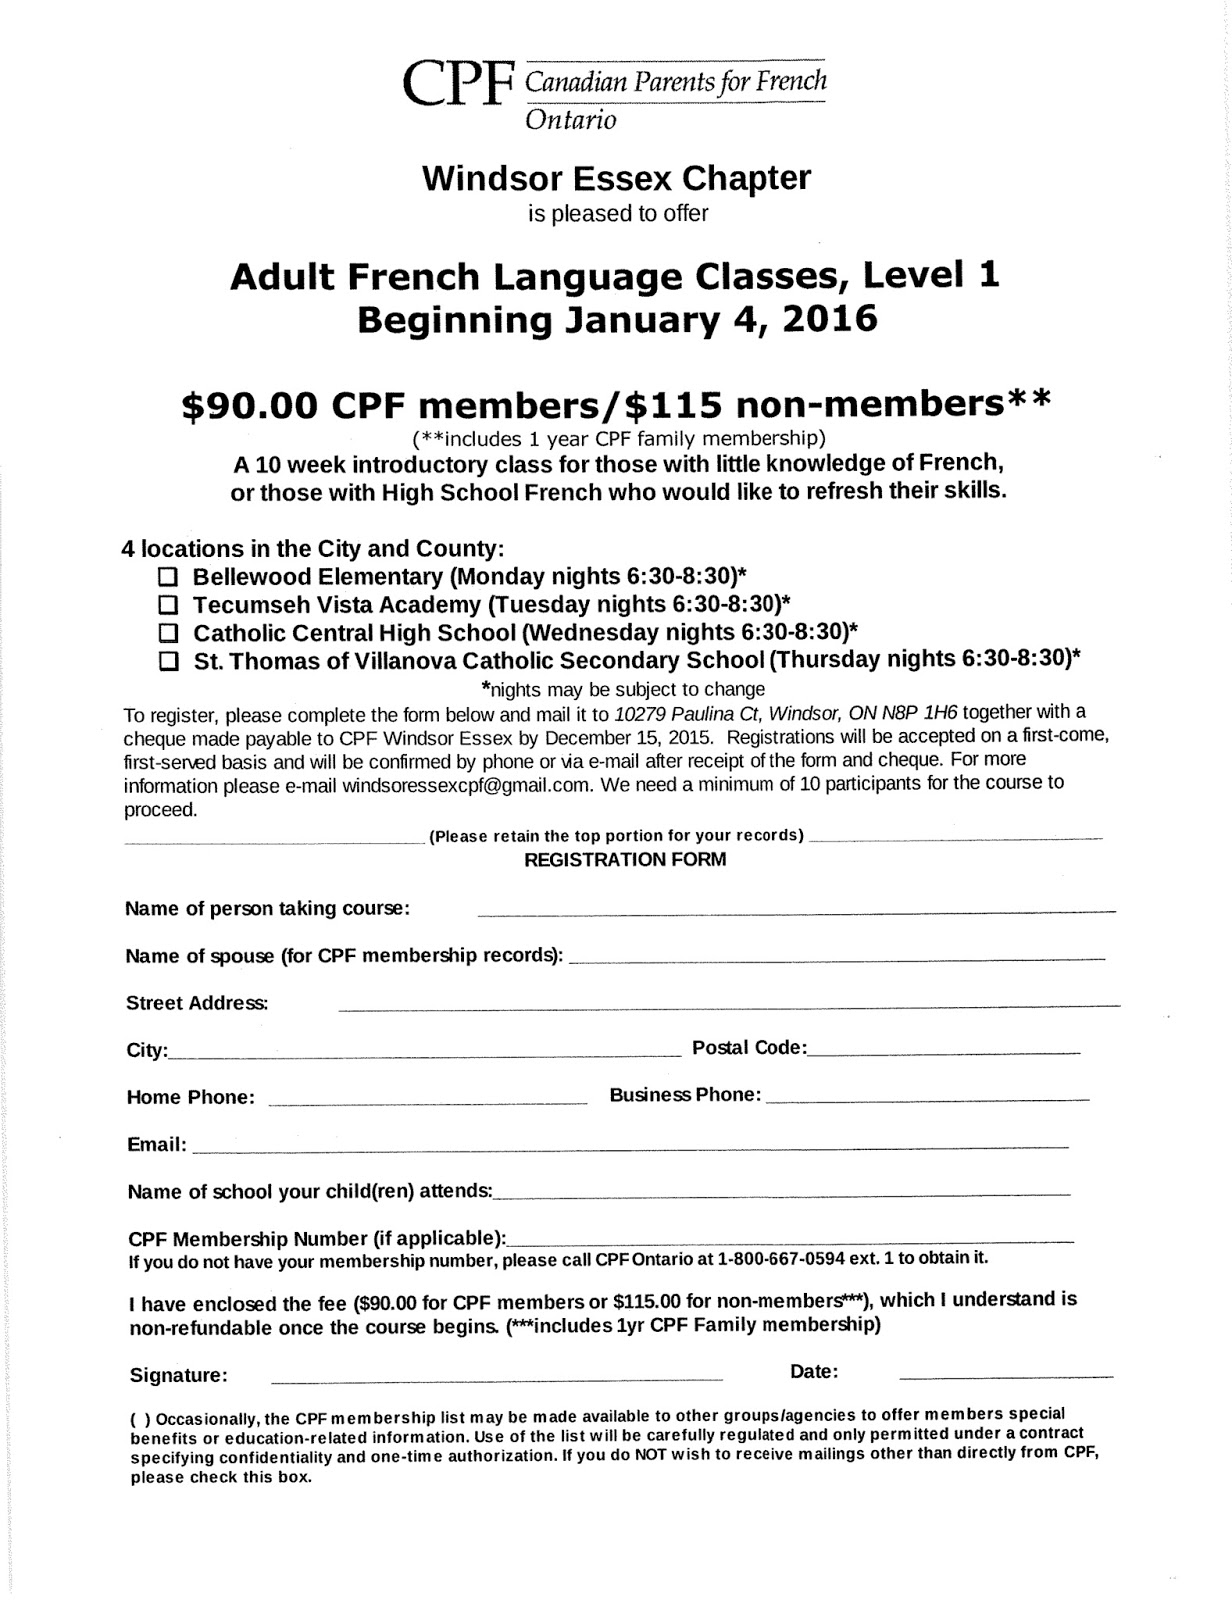 Adult Language Classes 41